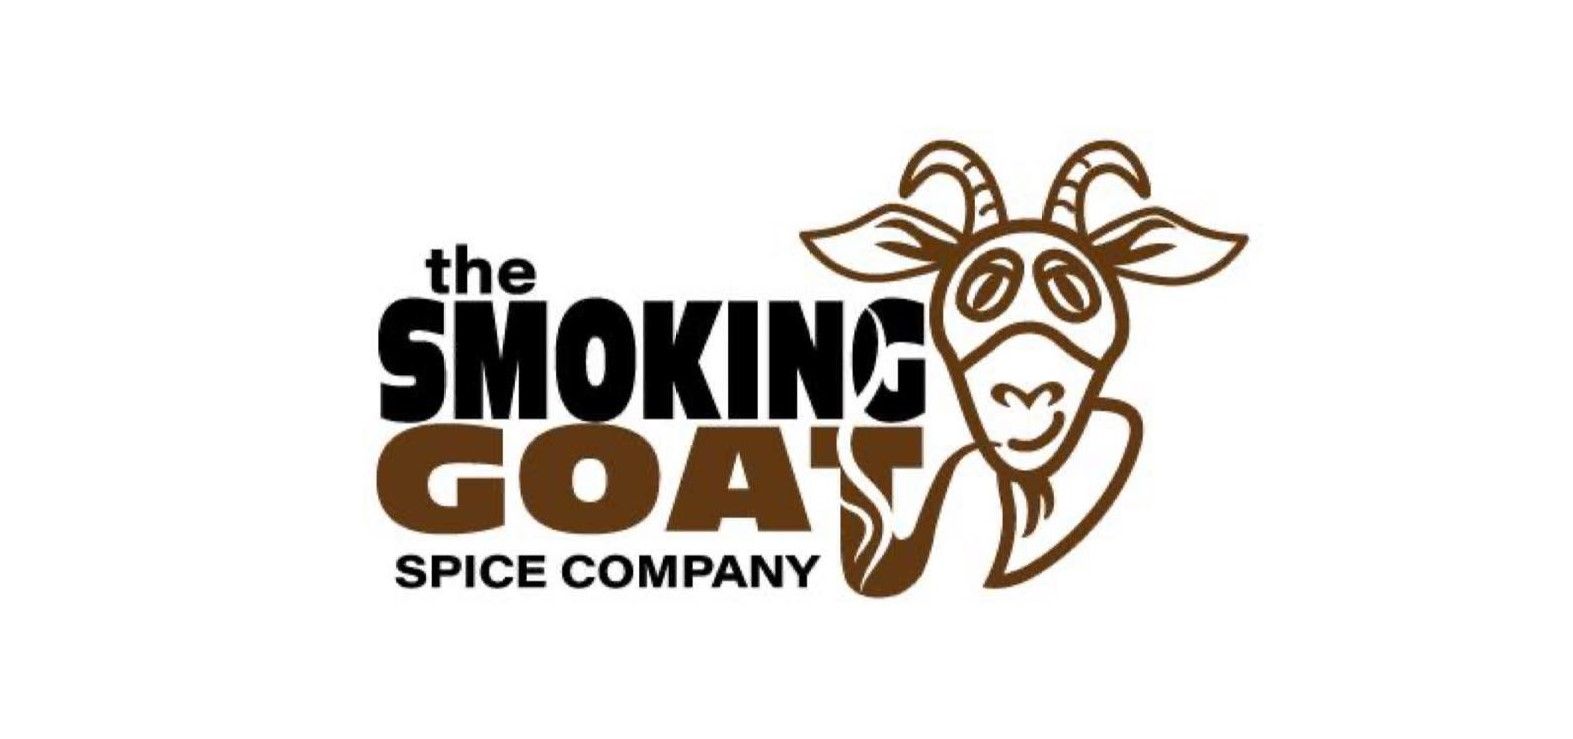 The Smoking Goat Spice Company - Lora Pegola